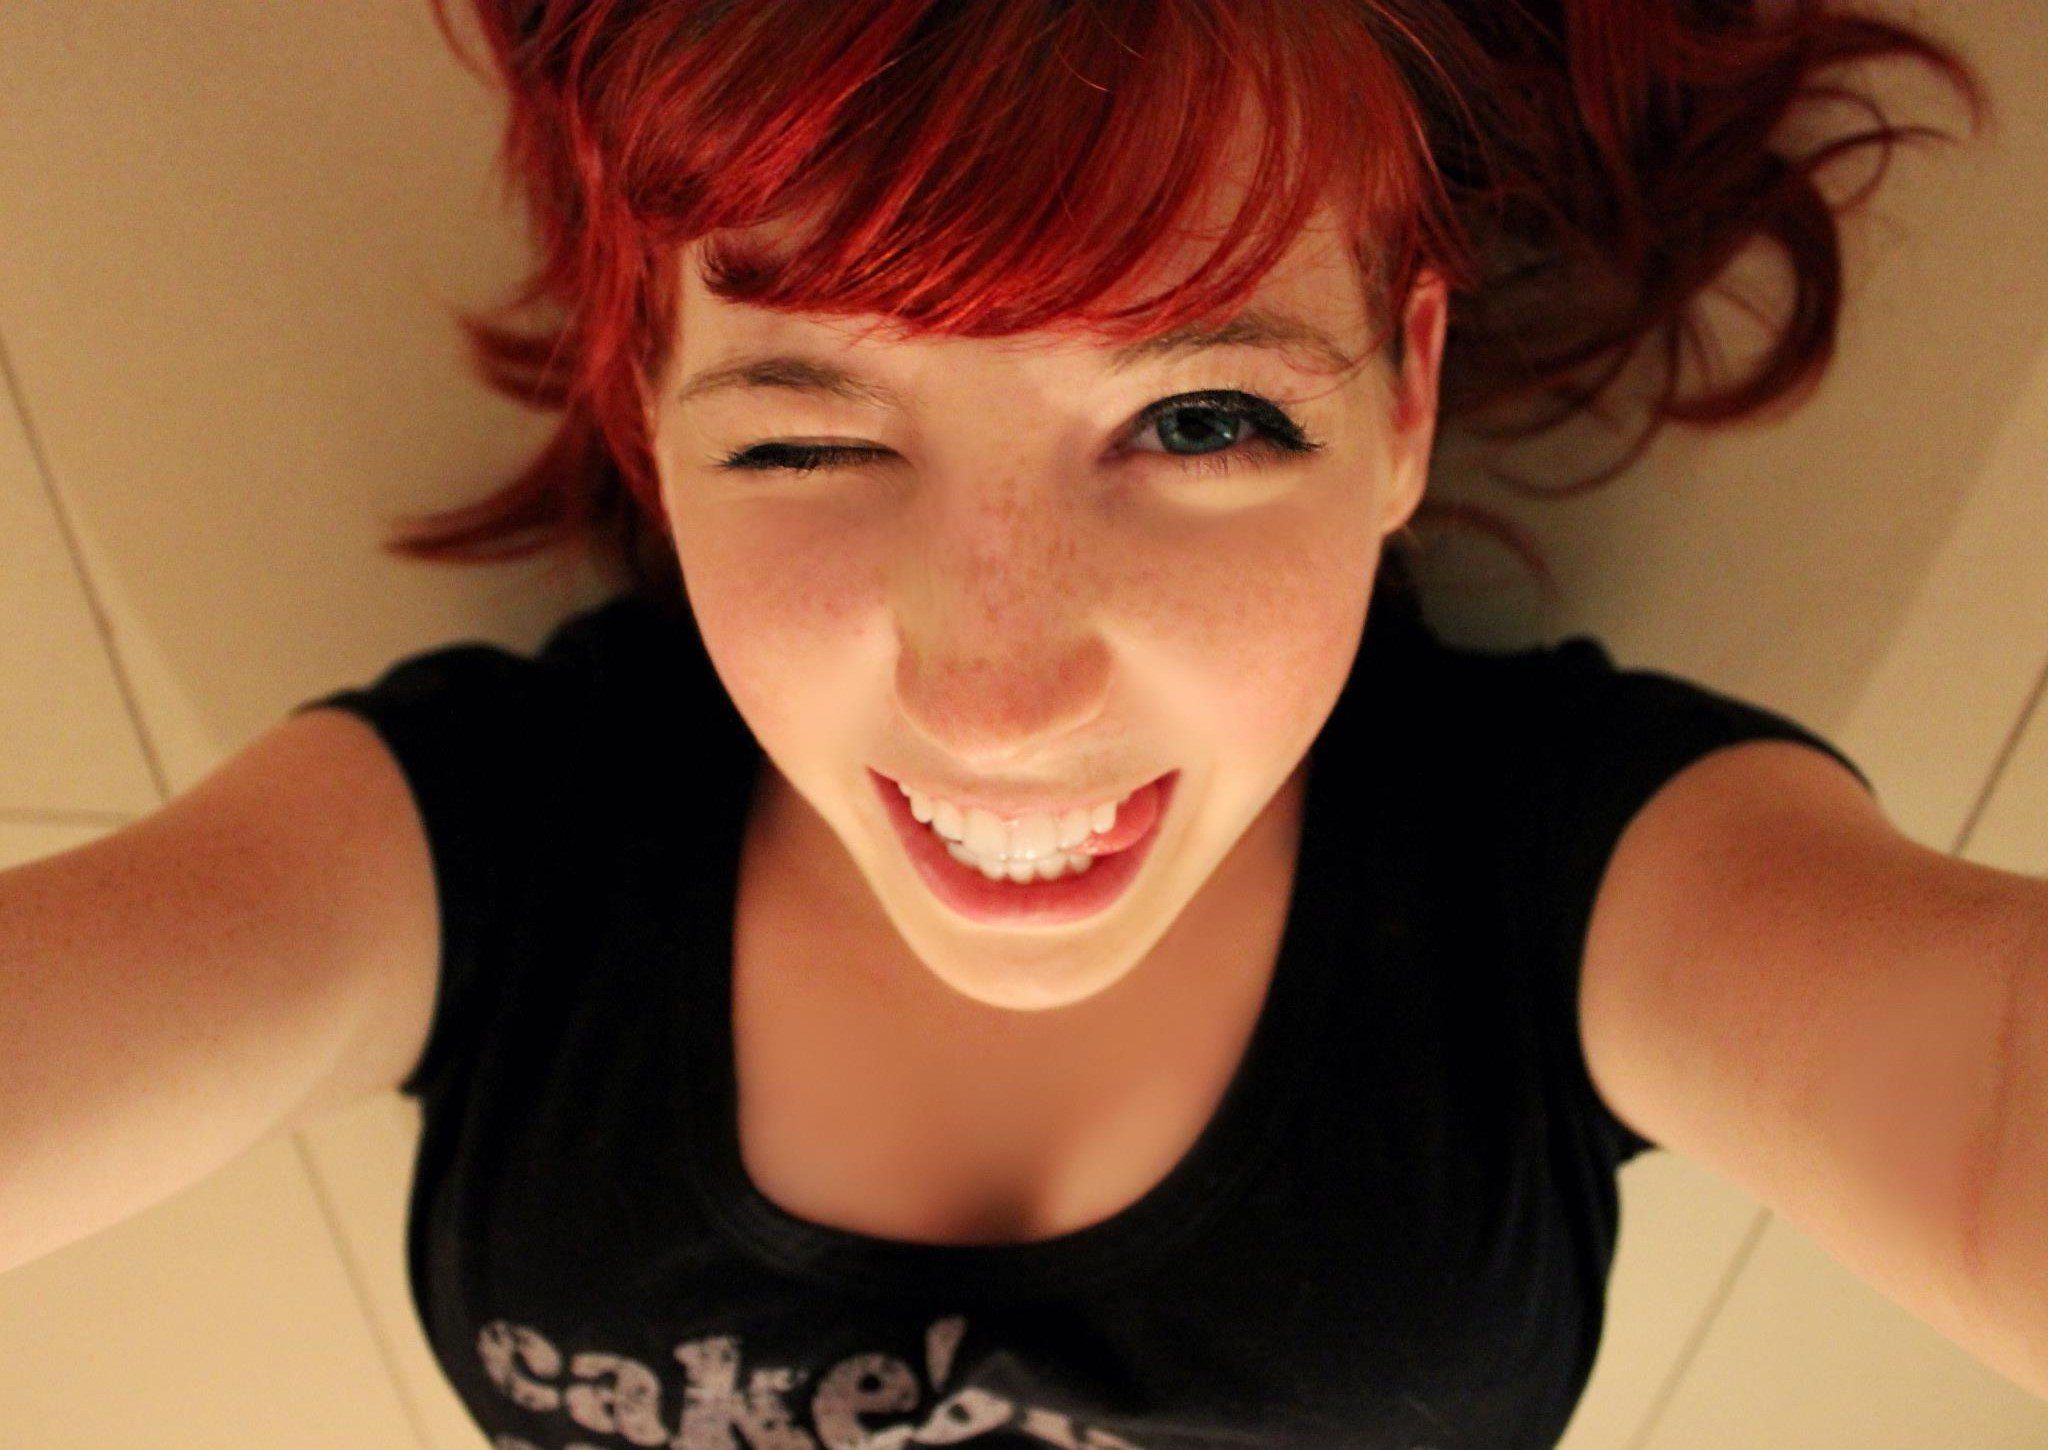 redhead milf facial selfie naked photo